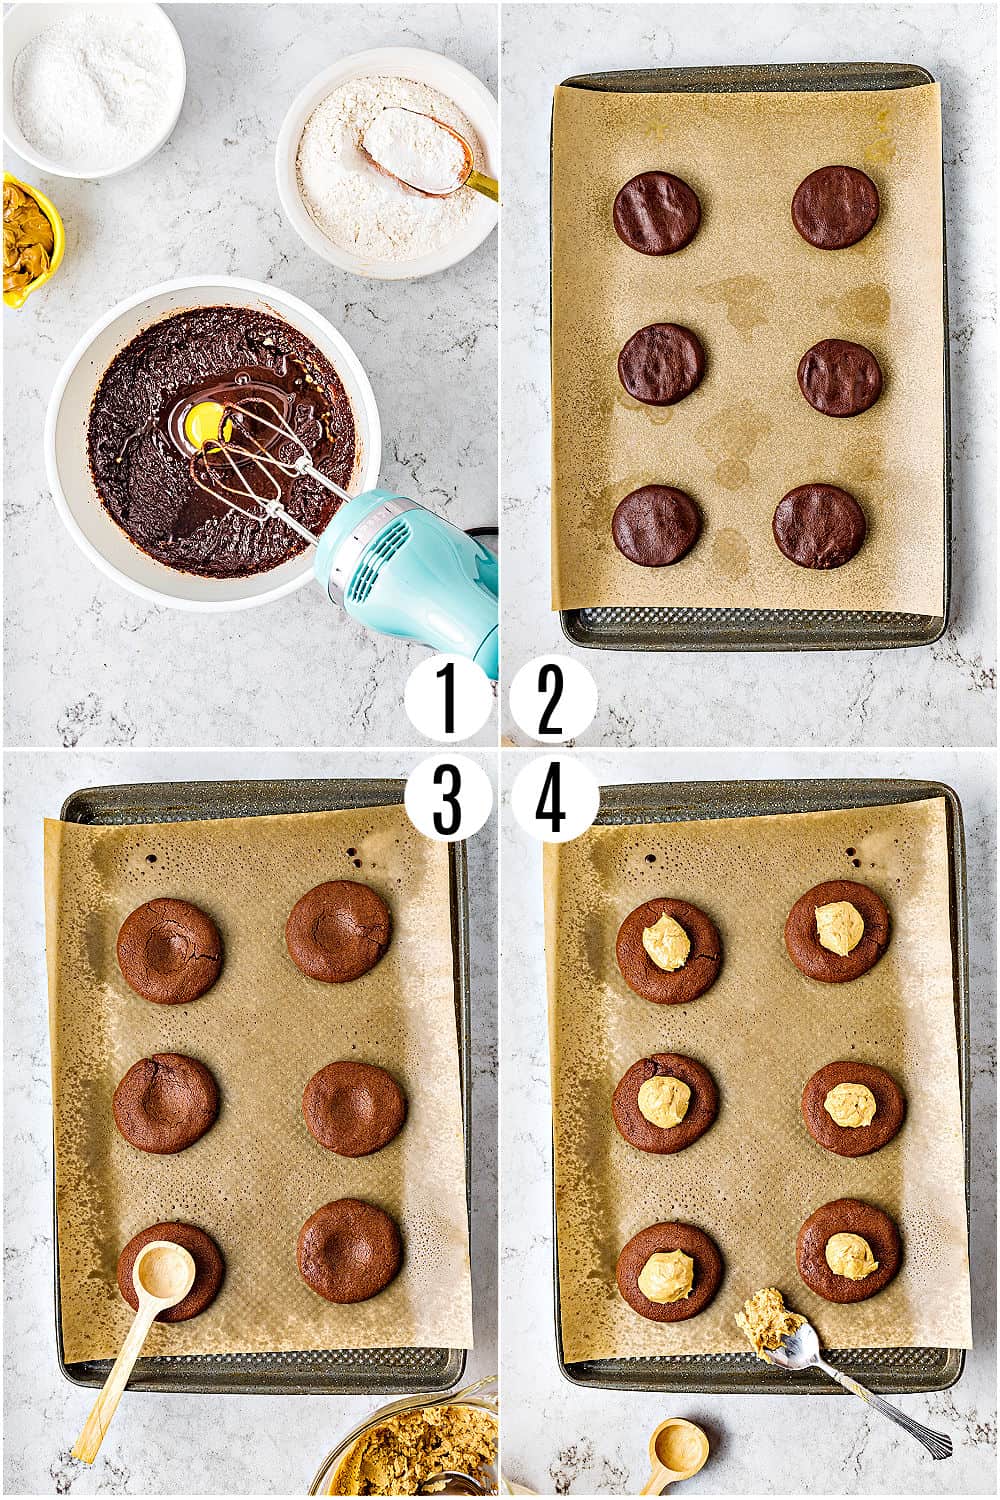 Step by step phtoos showing how to make buckeye brownie cookies.